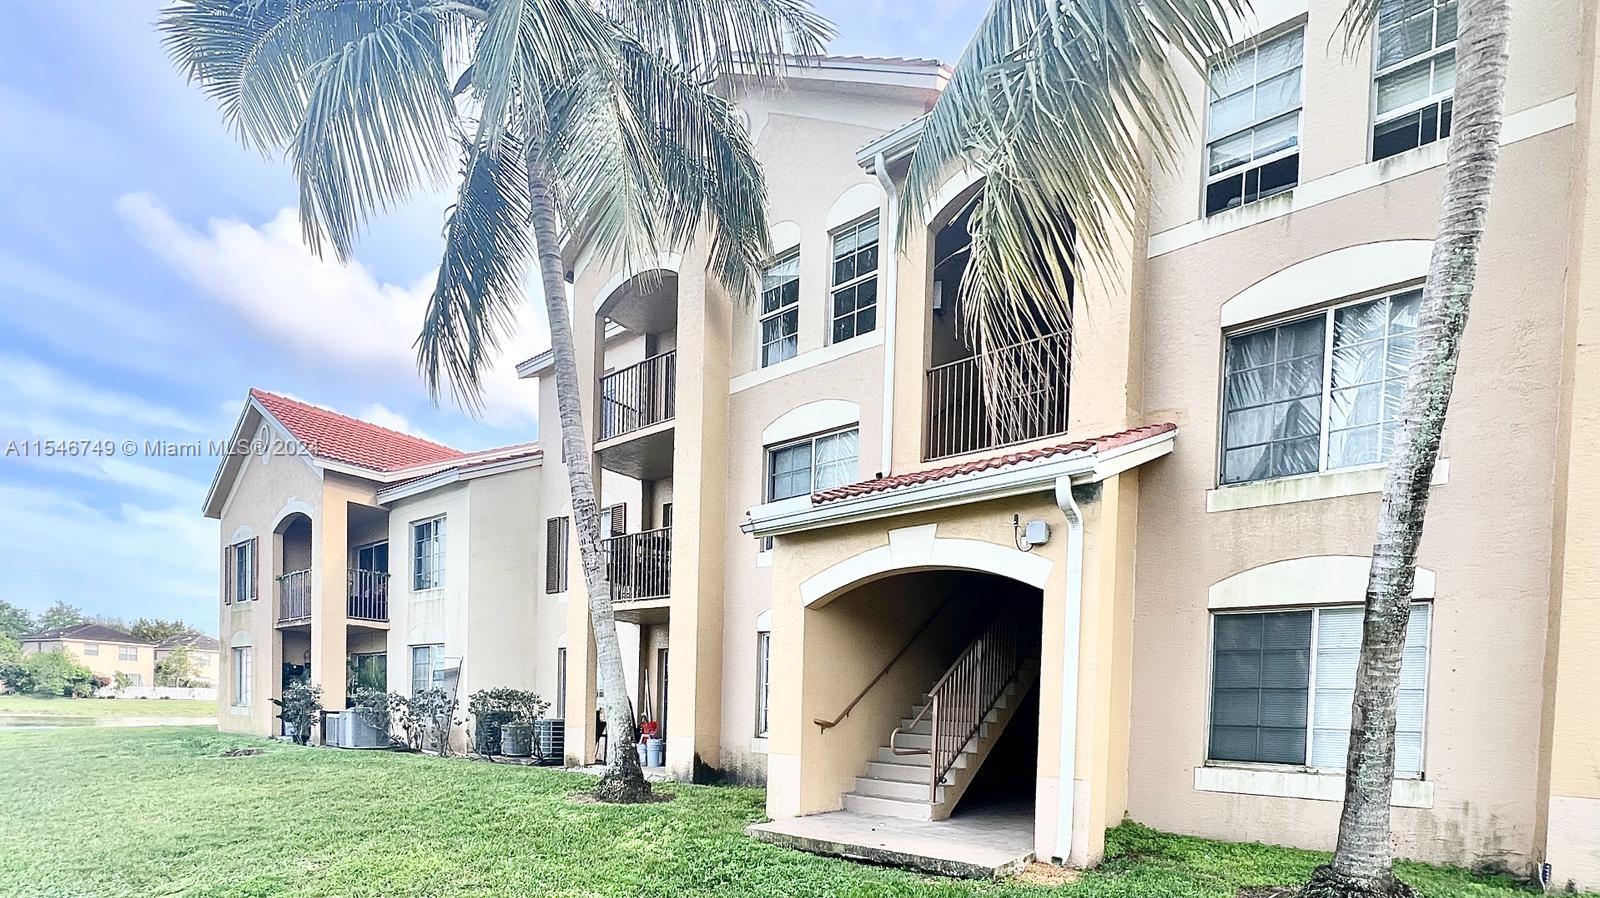 Rental Property at 4190 San Marino Blvd 306, West Palm Beach, Palm Beach County, Florida - Bedrooms: 1 
Bathrooms: 1  - $1,800 MO.